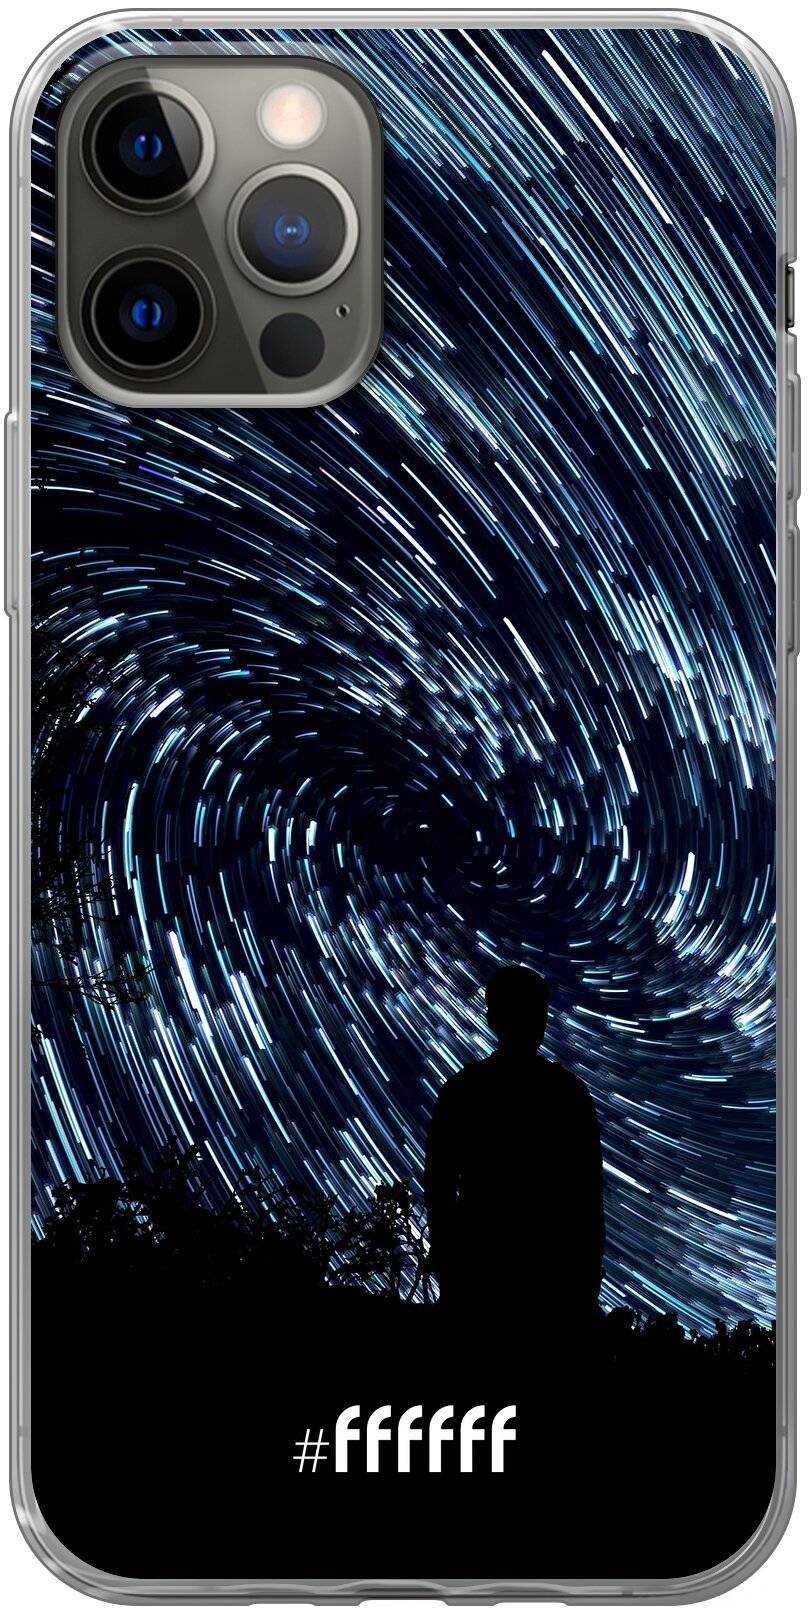 Starry Circles iPhone 12